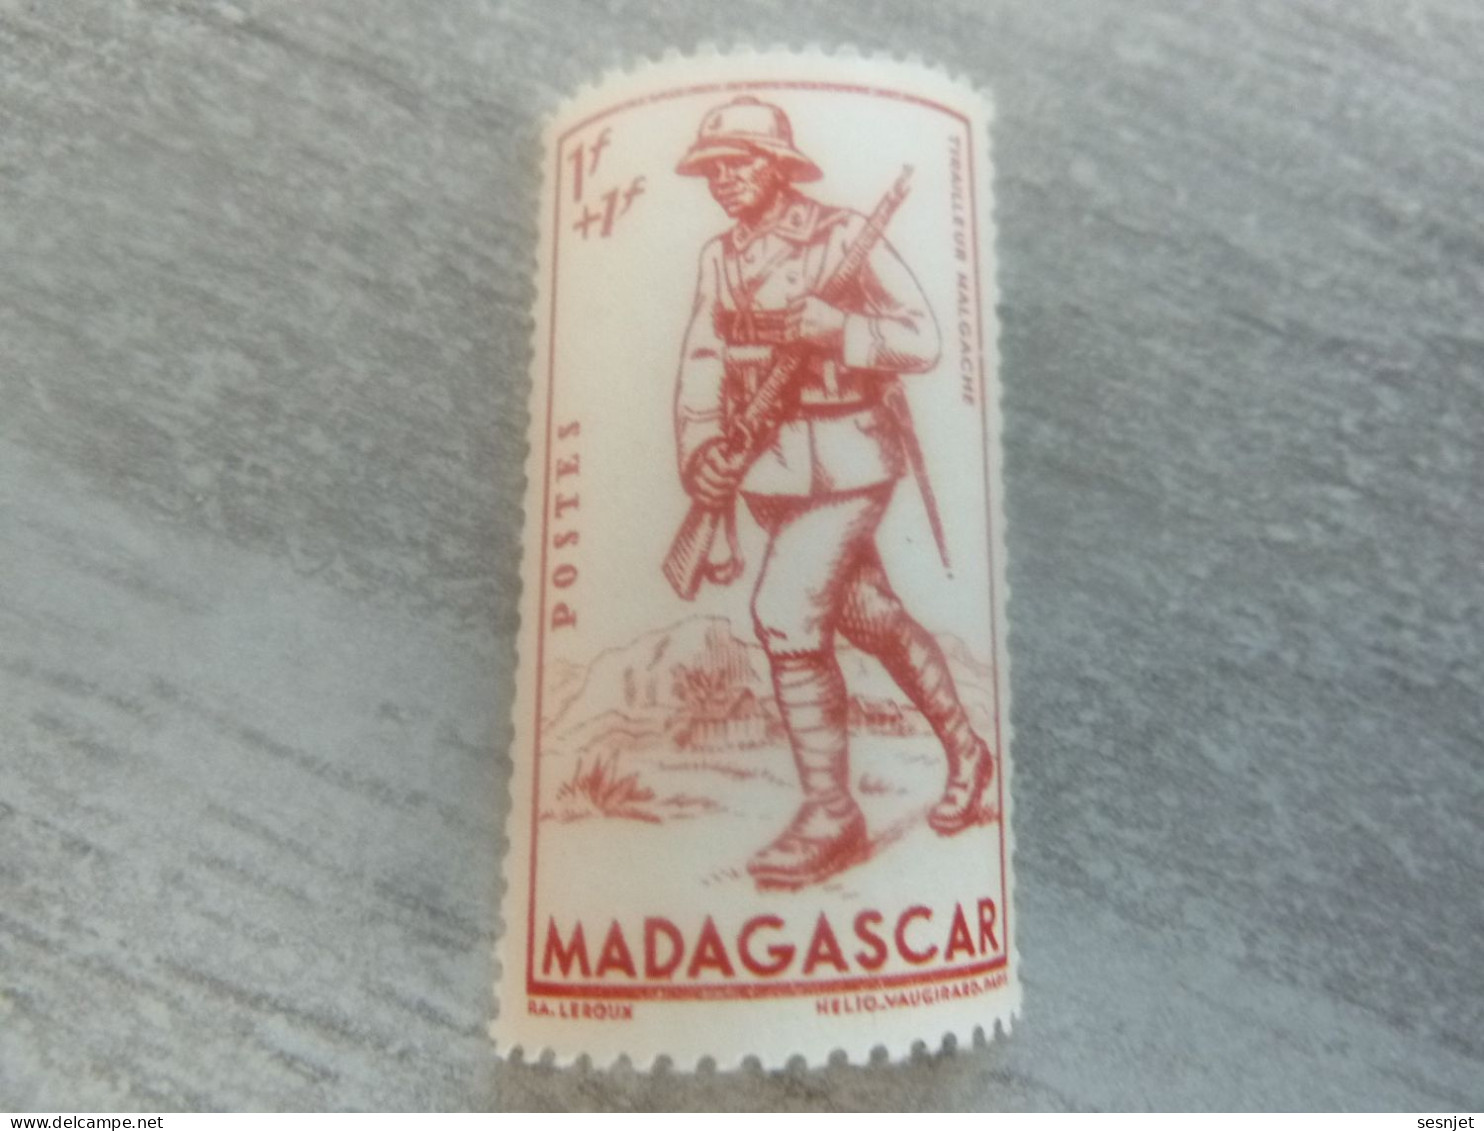 Madagascar - Tirailleur Malgache - 1f.+1f. - Yt 226 - Helio Vaugirard Paris - Rouge-orange - Neuf - Année 1941 - - Ongebruikt